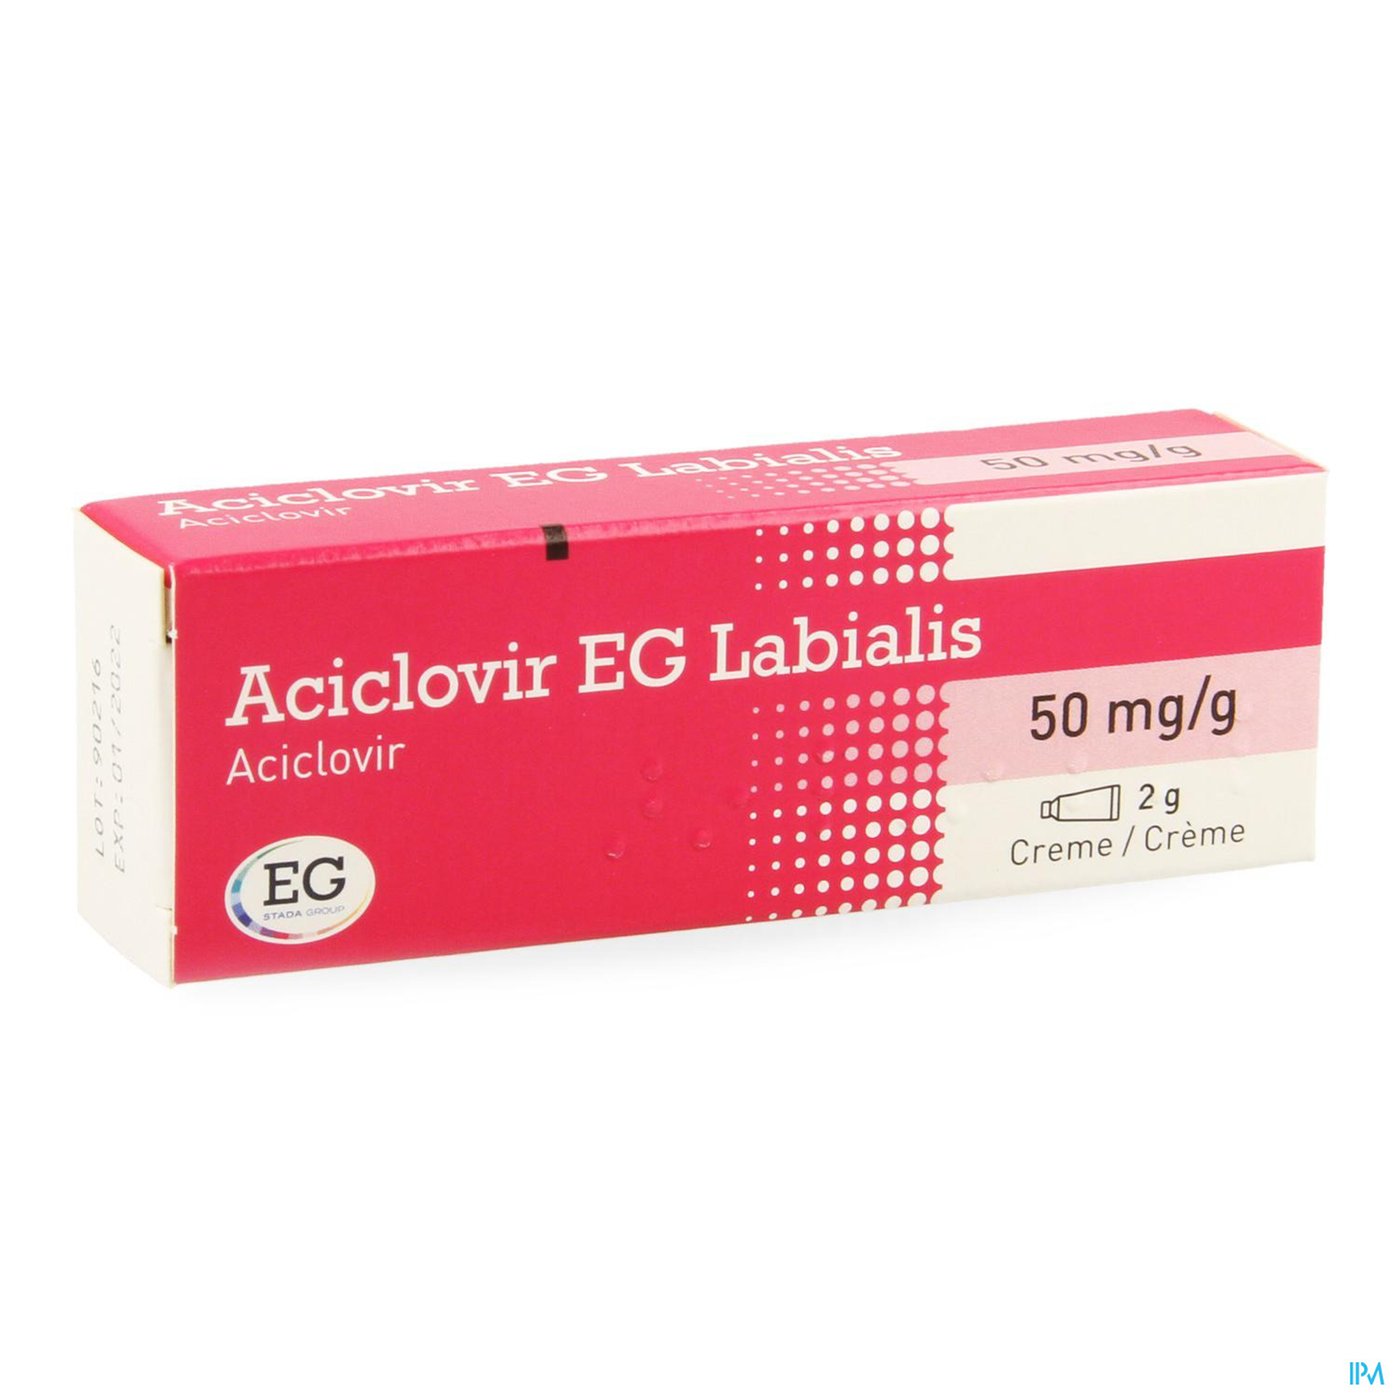 Aciclovir EG Labialis Creme 2Gr packshot